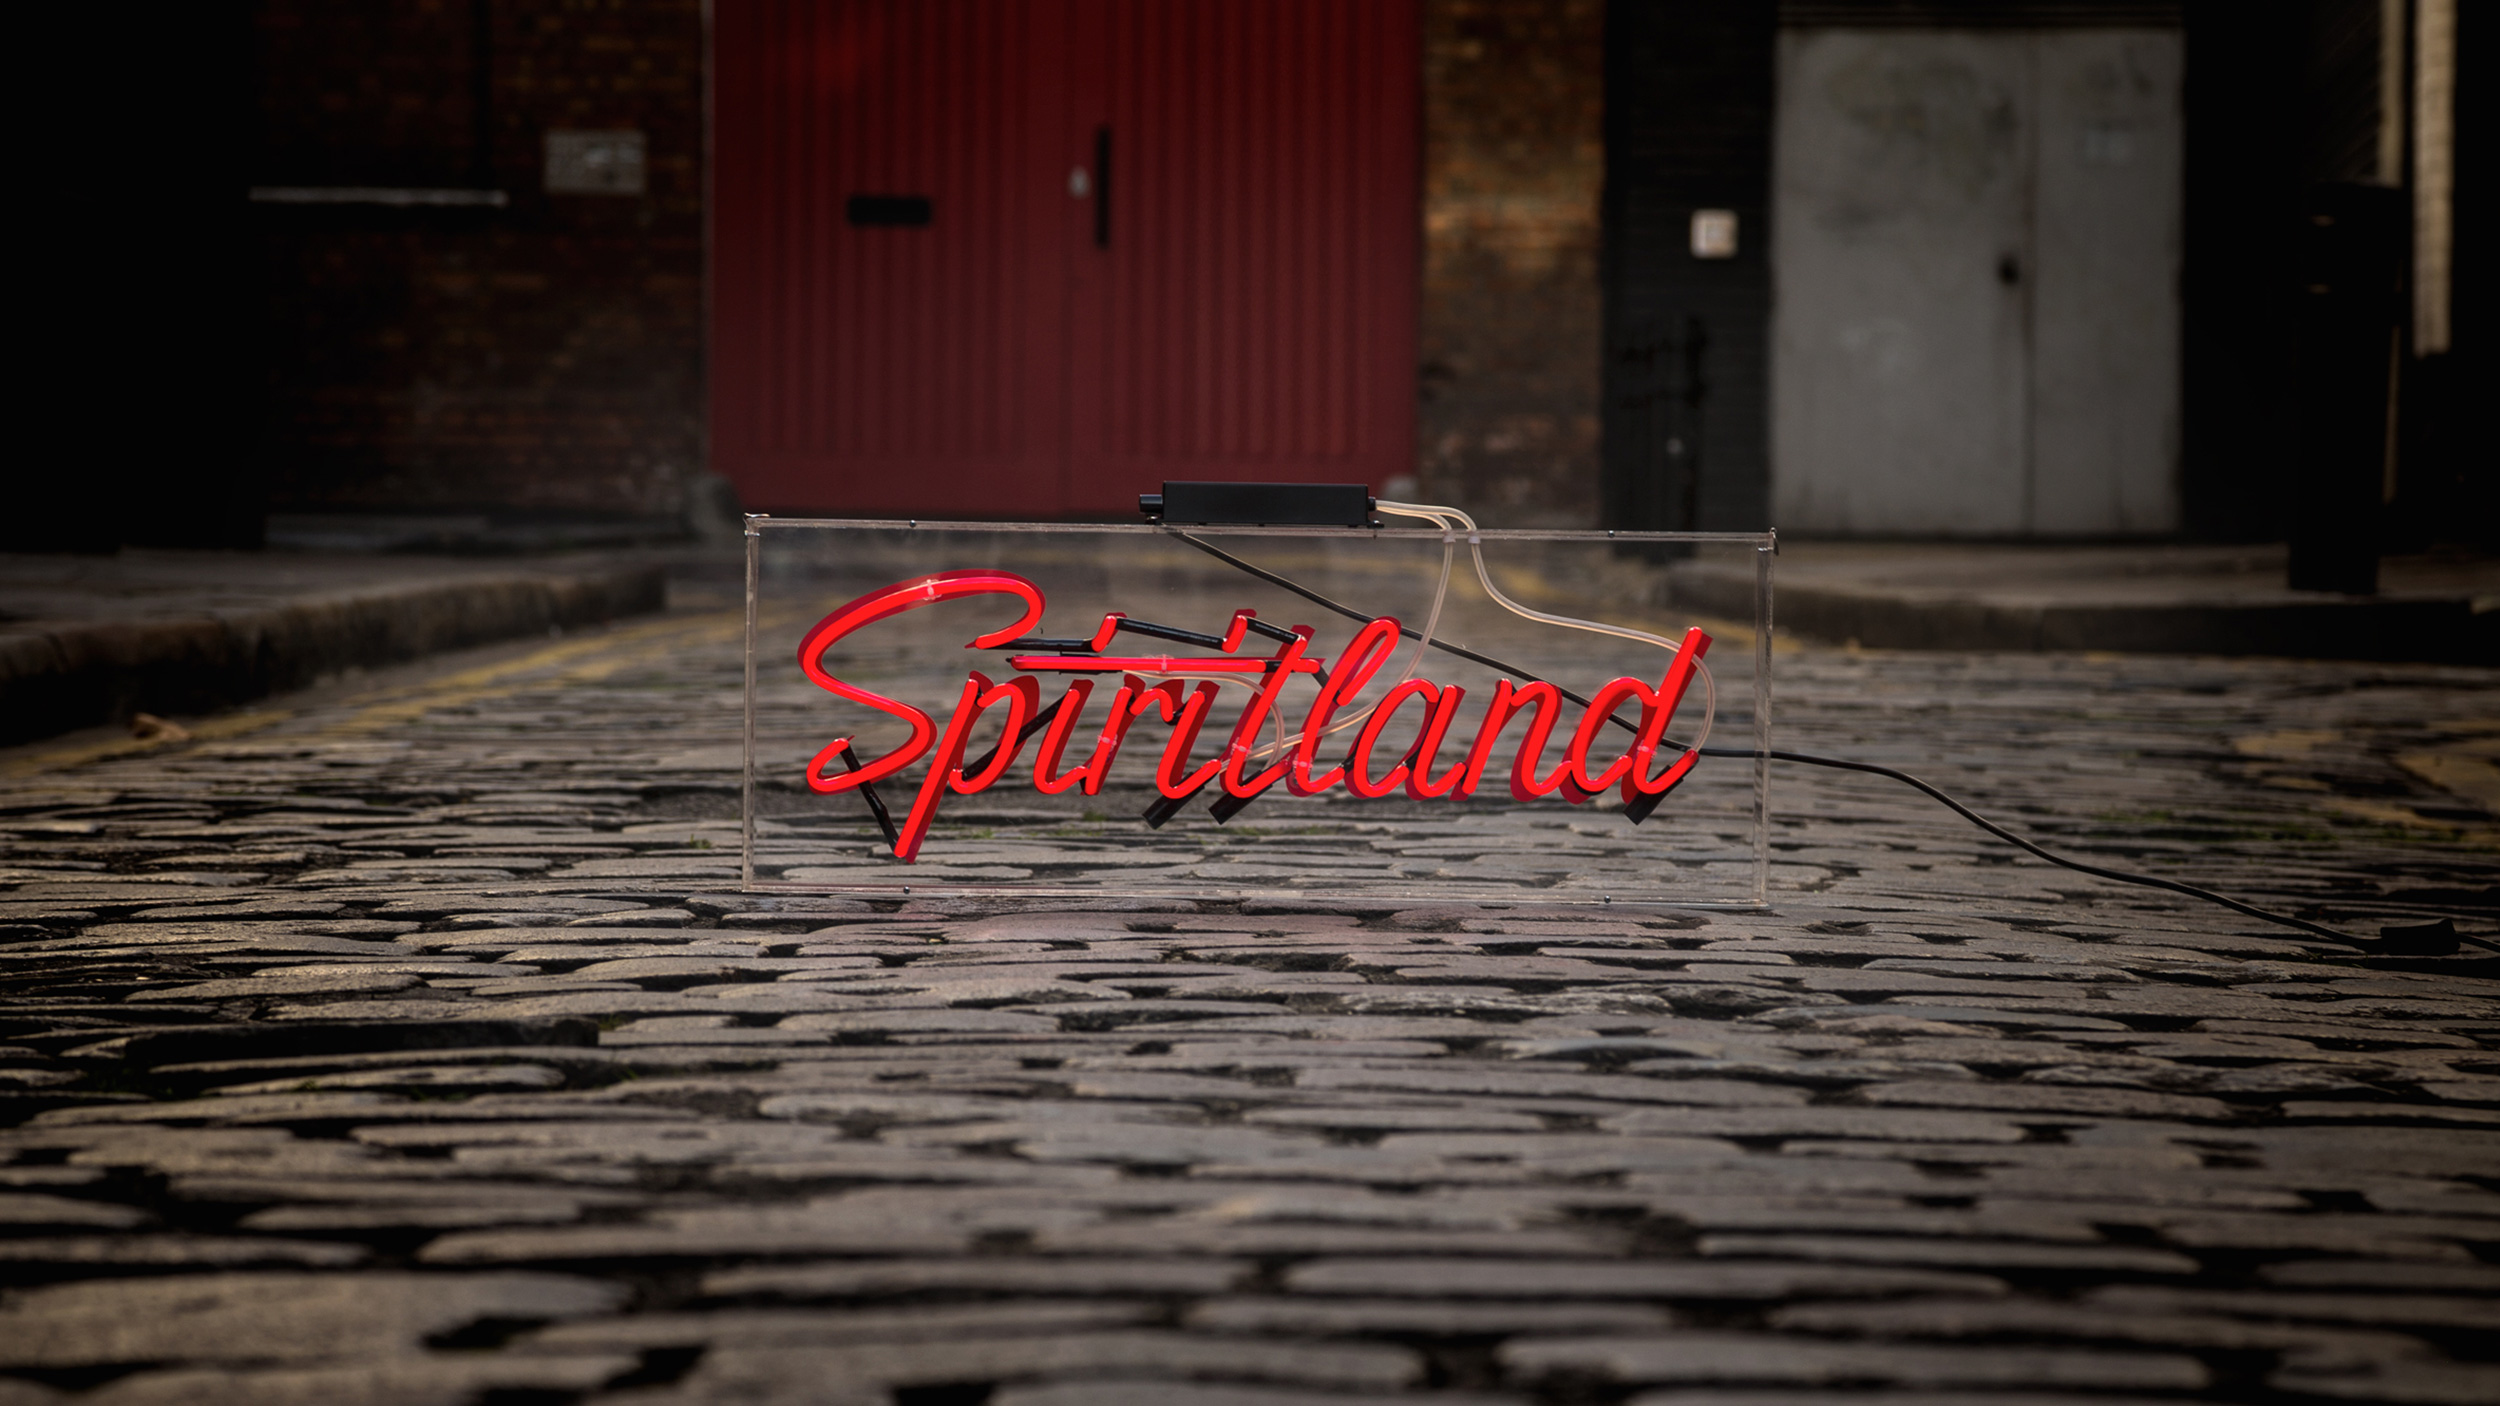 Spiritland Branding